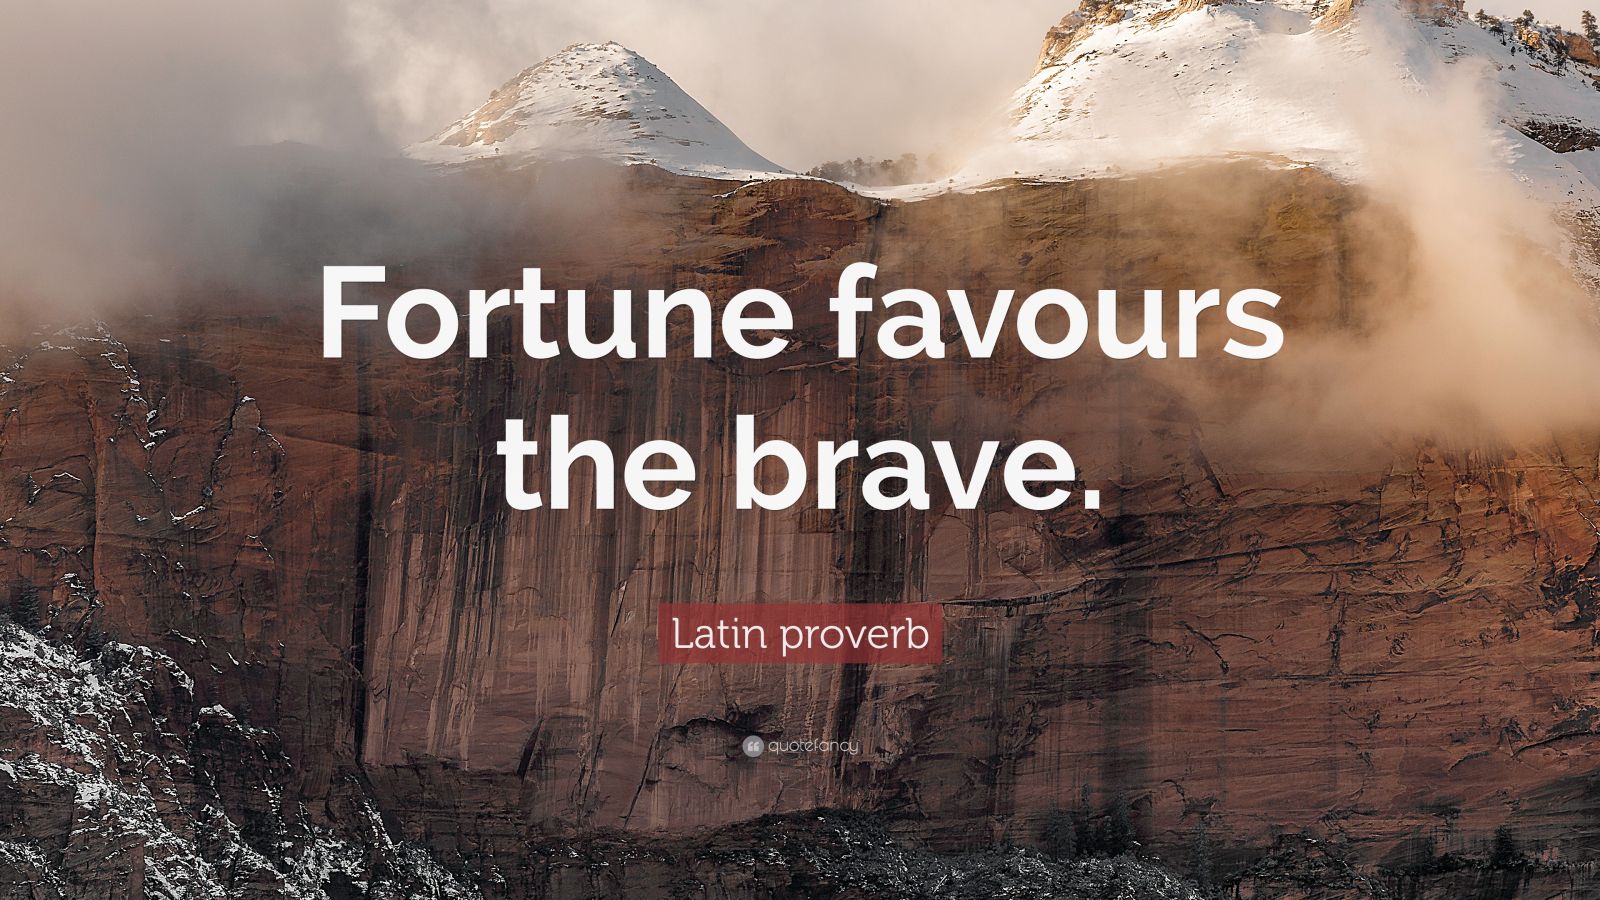 Latin proverb Quote: 